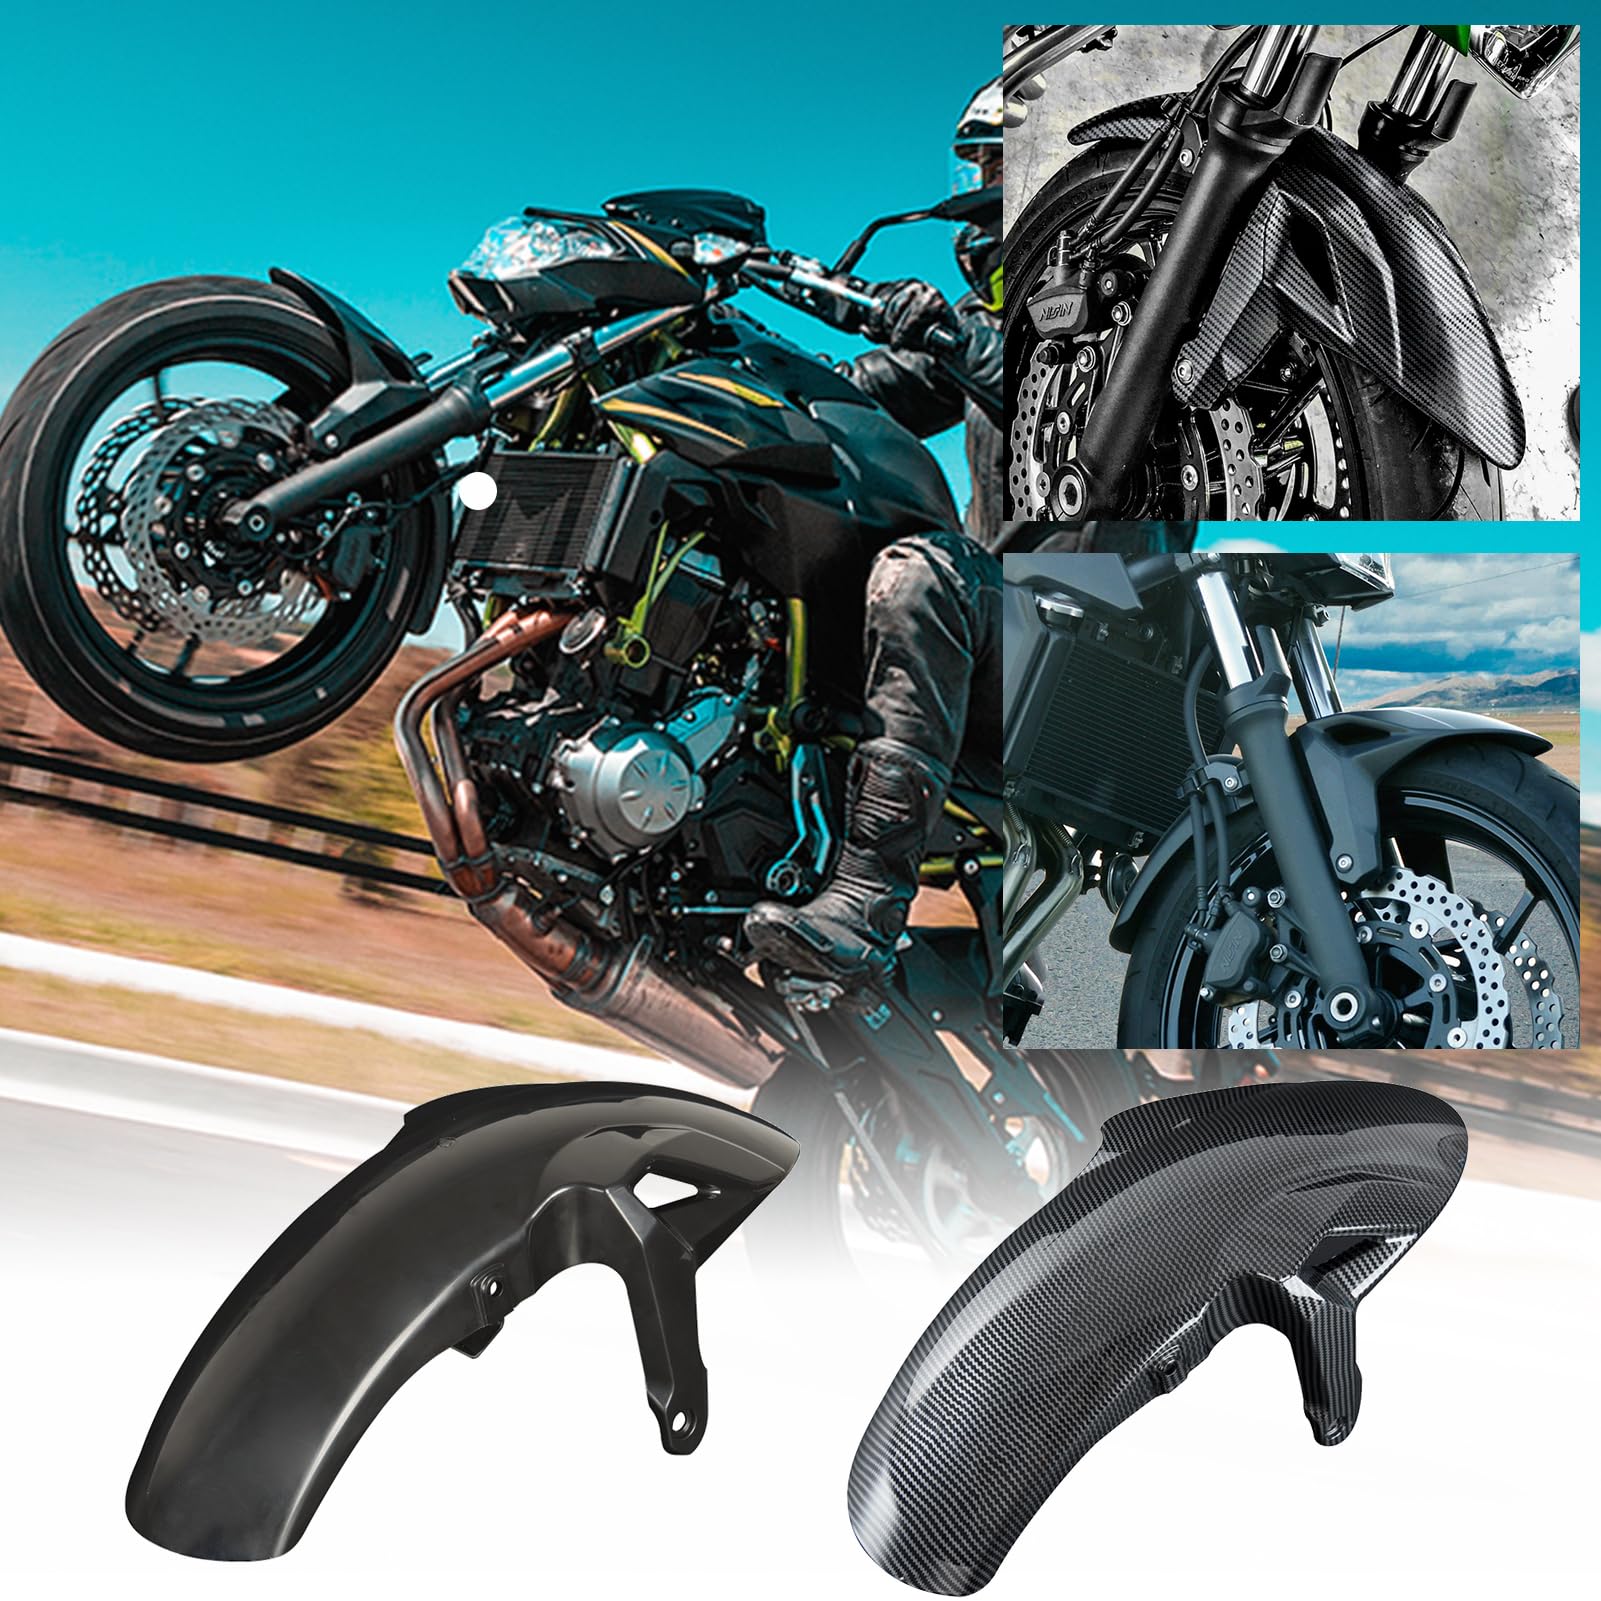 Motorrad Vorderrad Kotflügel Z650 Kotflügelabdeckung Verkleidung Schmutzfängerschutz Kompatibel mit K-awasaki Z650 Ninja 650 Ninja 650 2017 2018 2019 2020 2021 2022 2023 Spritzschutz (Unbemalte Farbe) von TAZGANTAX